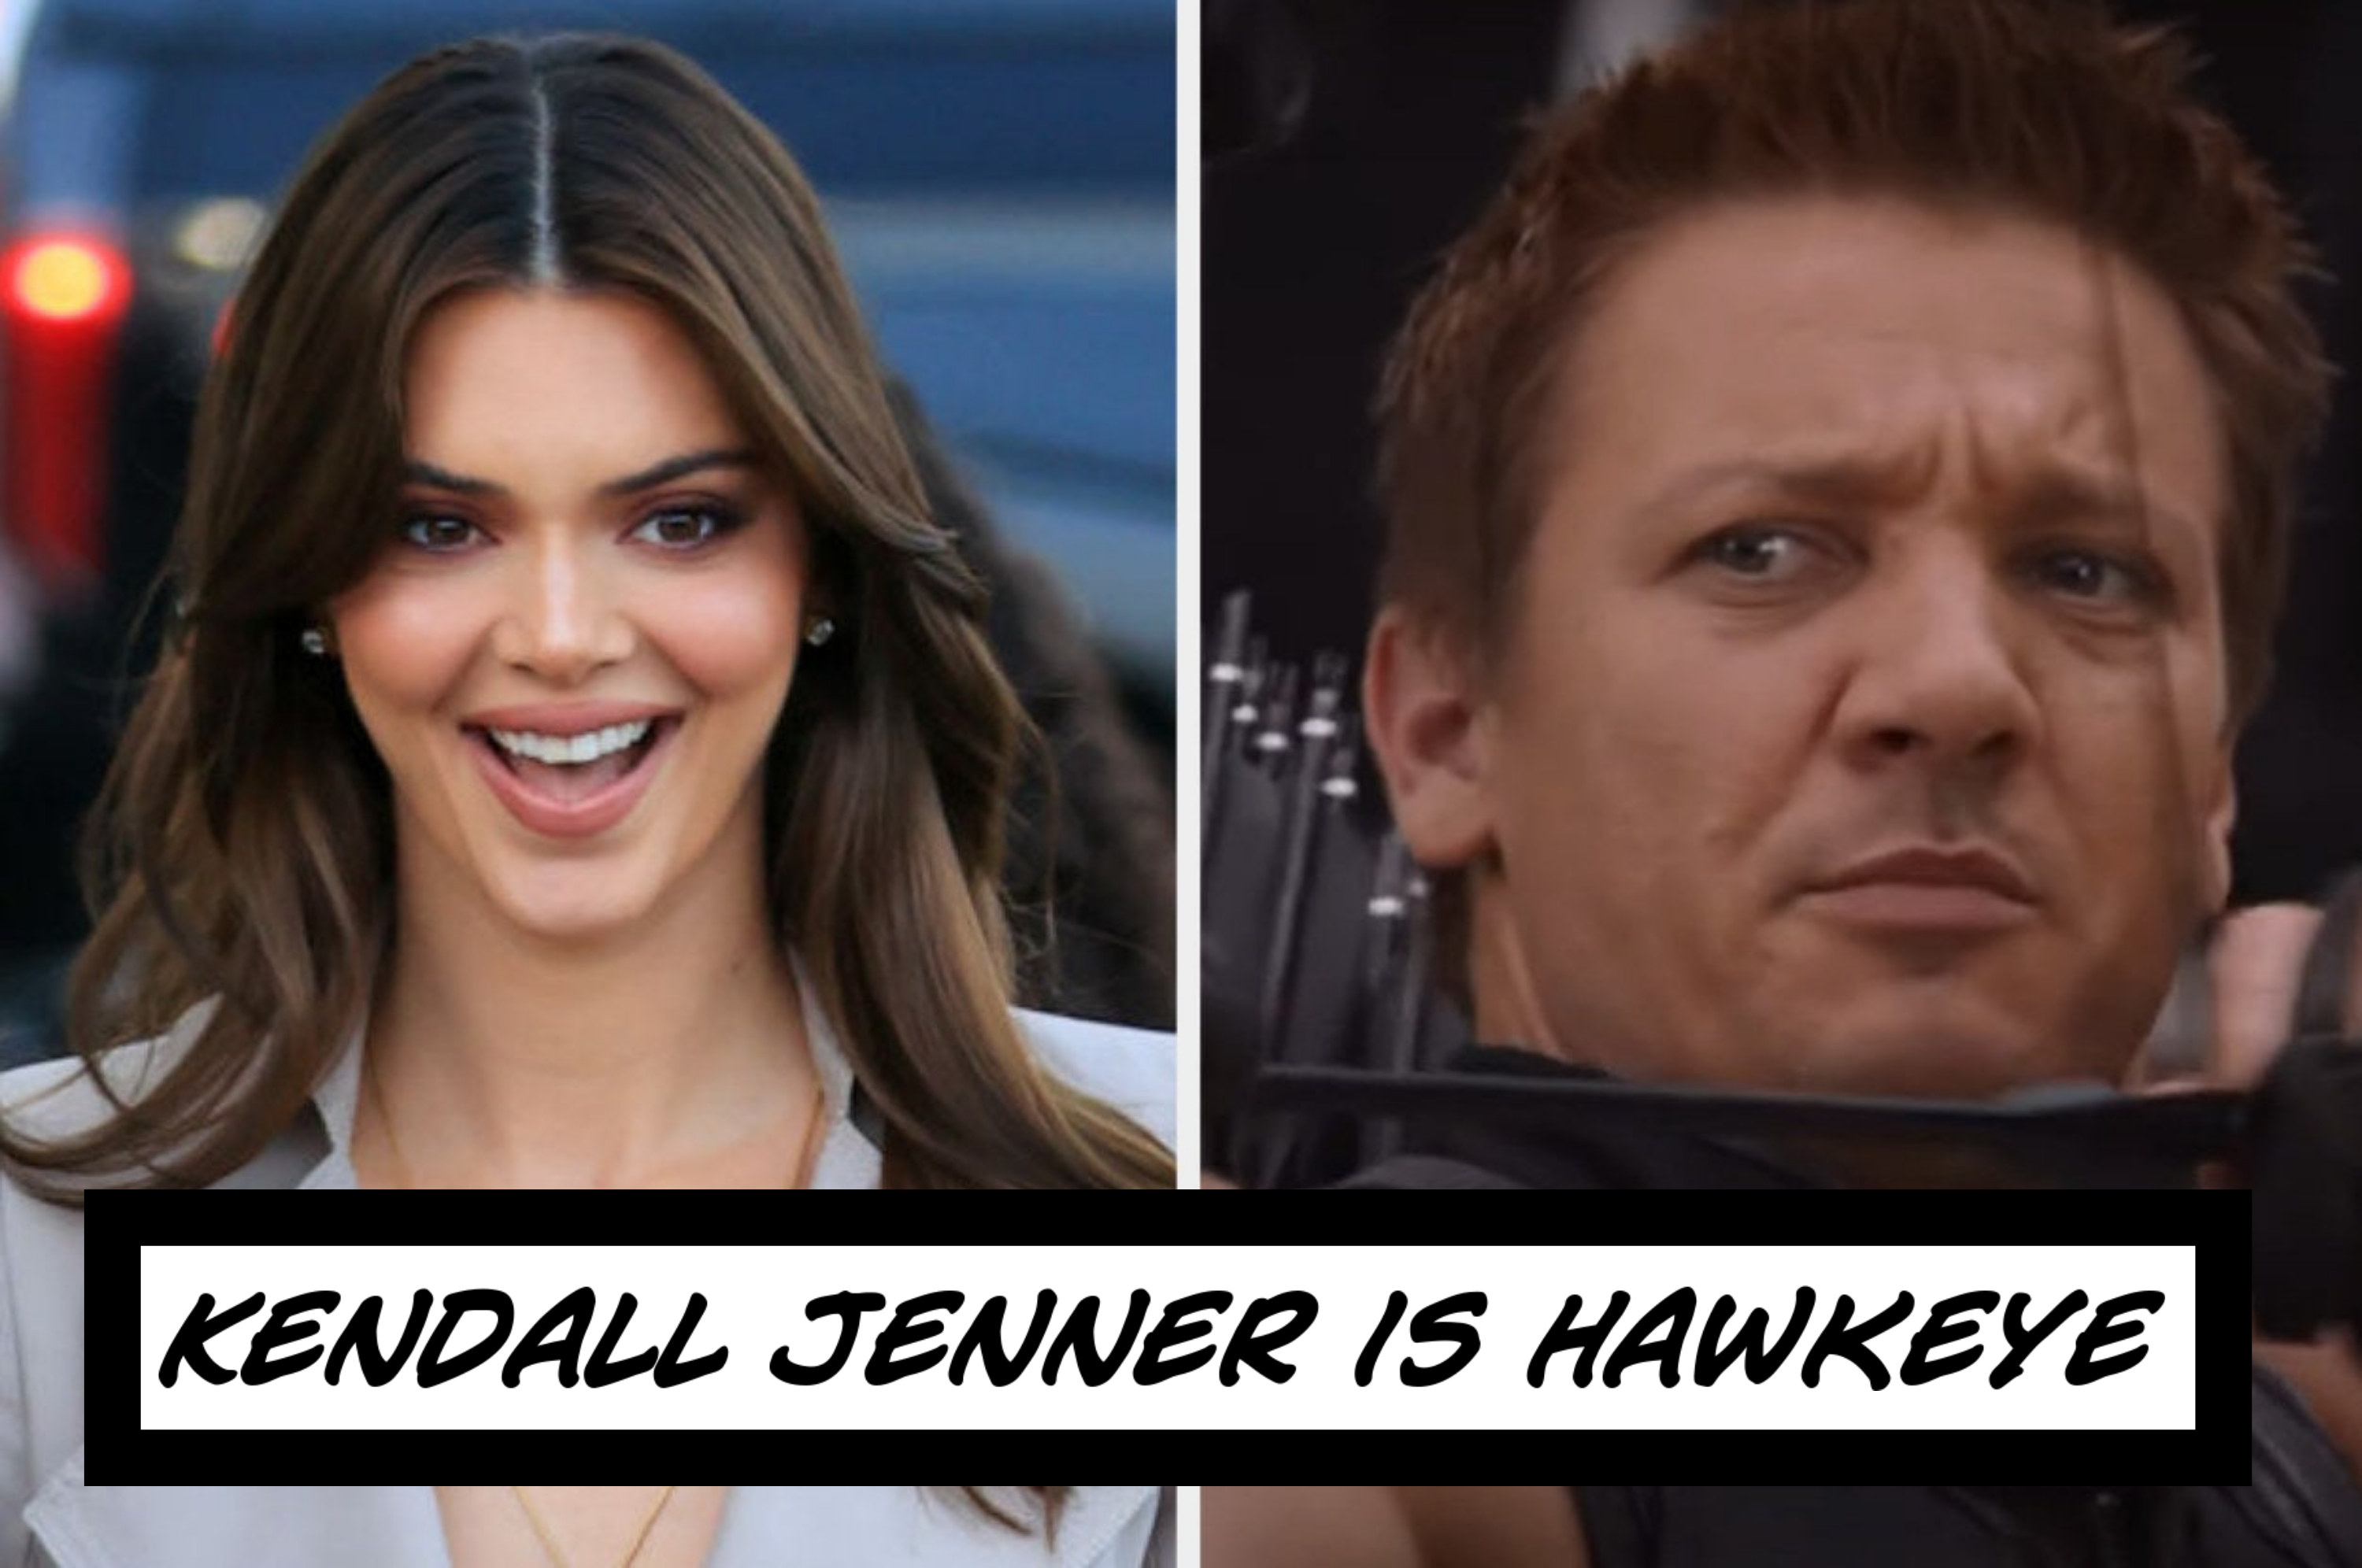 Kendall Jenner as Hawkeye